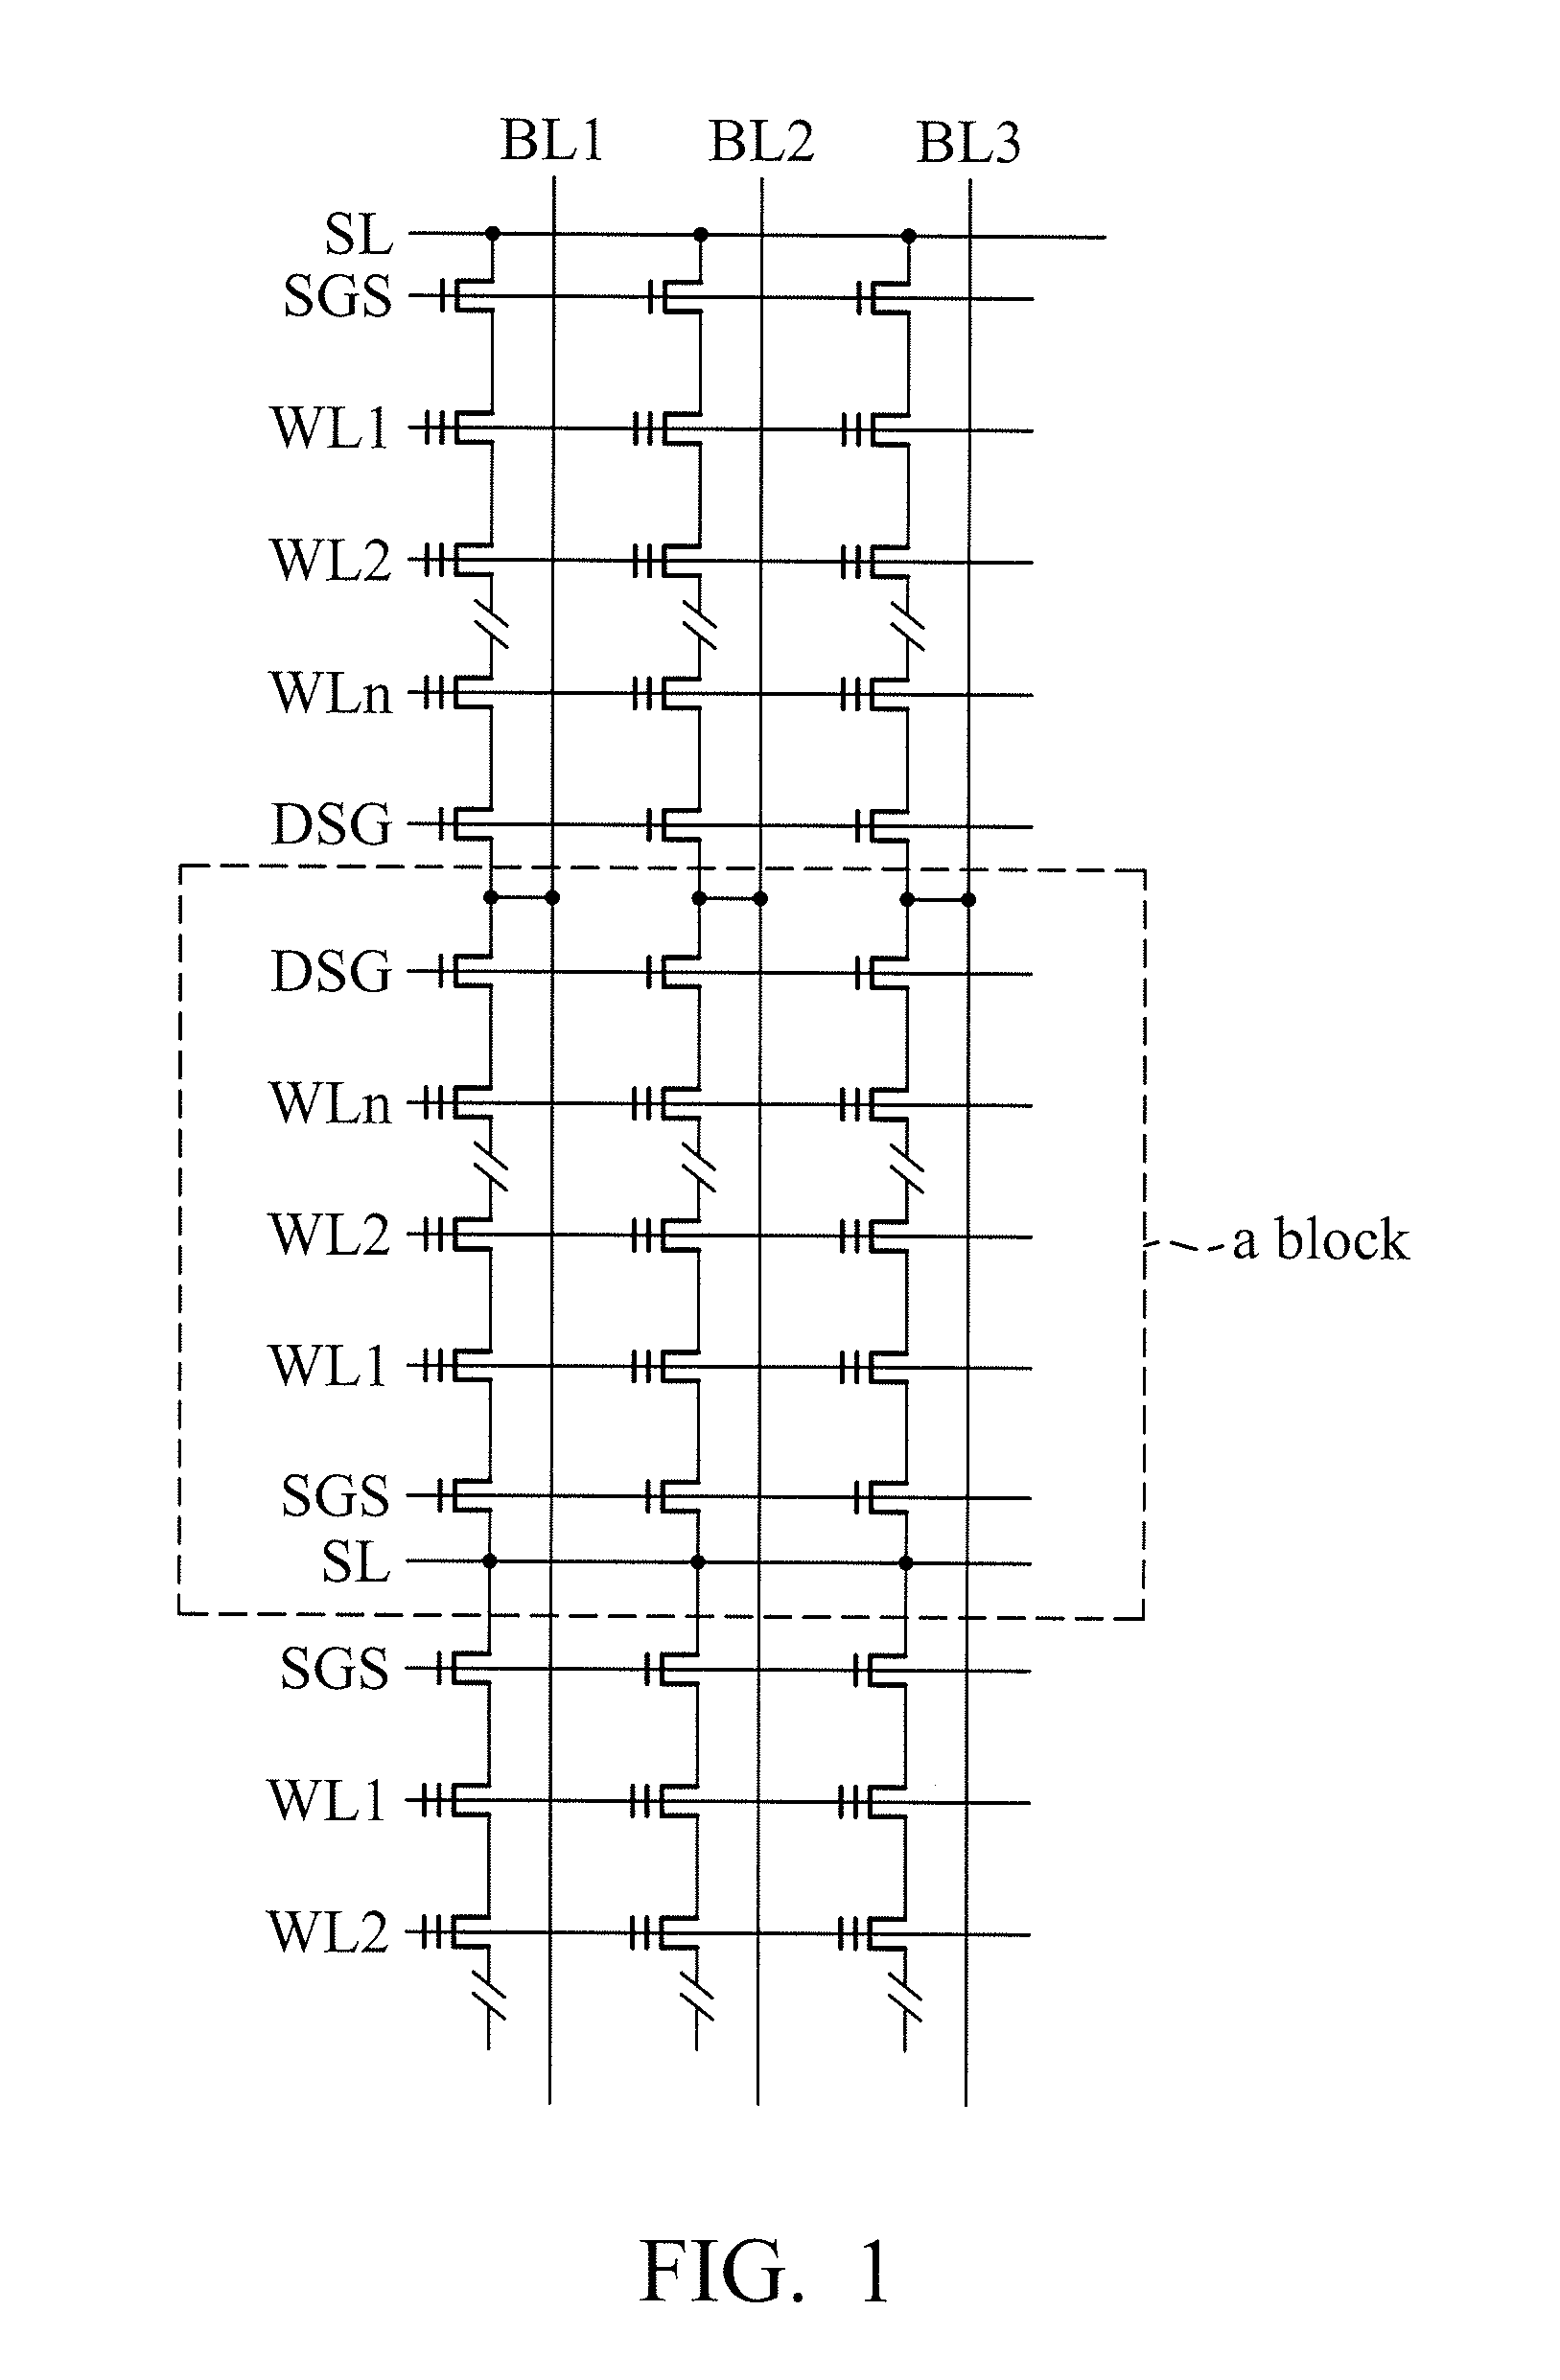 Programming method for NAND-type flash memory